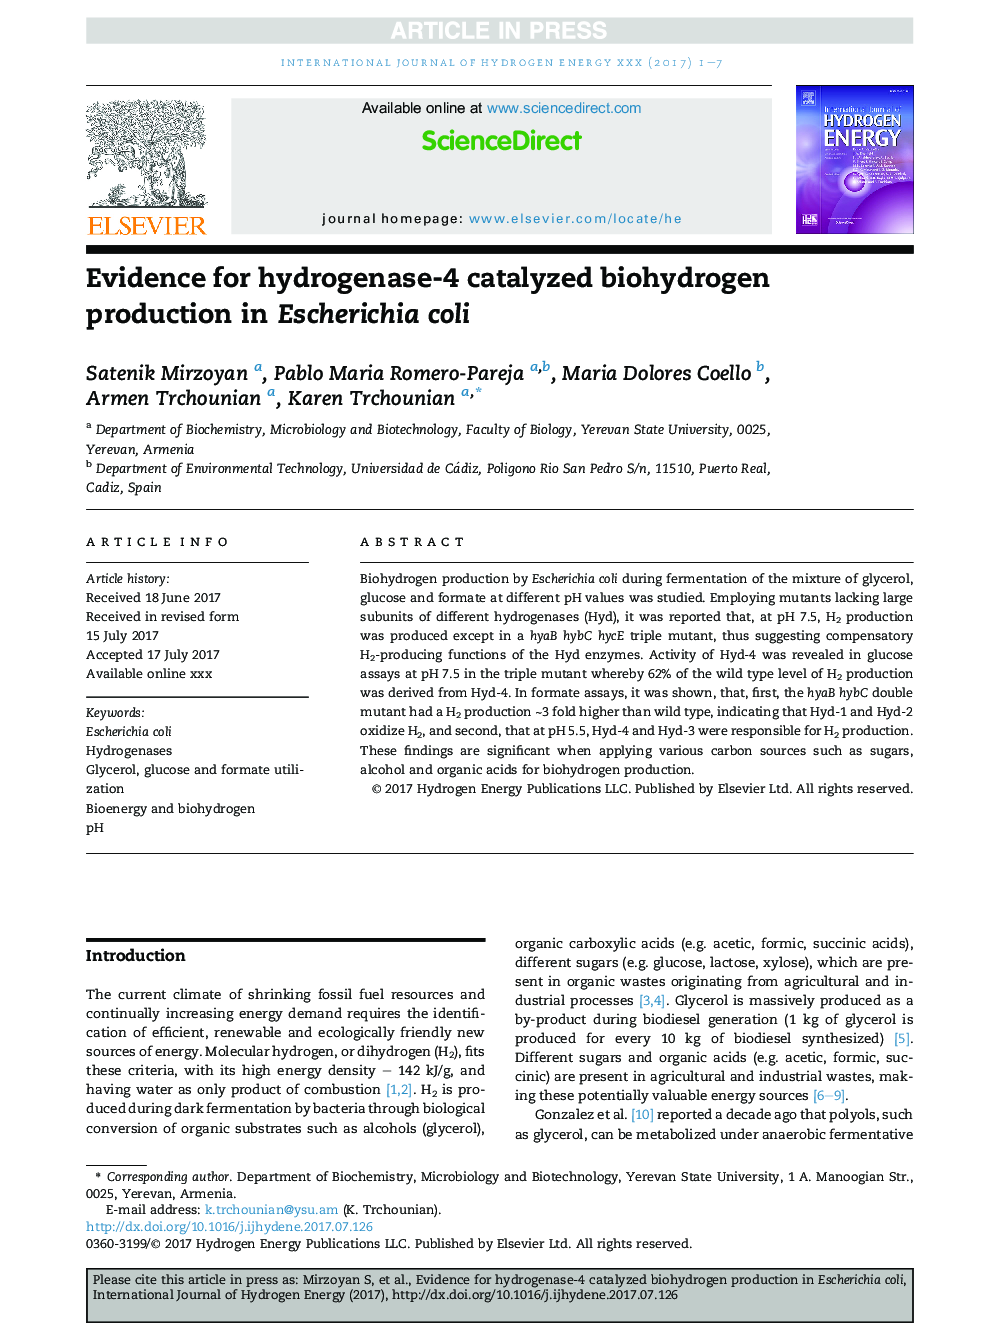 Evidence for hydrogenase-4 catalyzed biohydrogen production in Escherichia coli